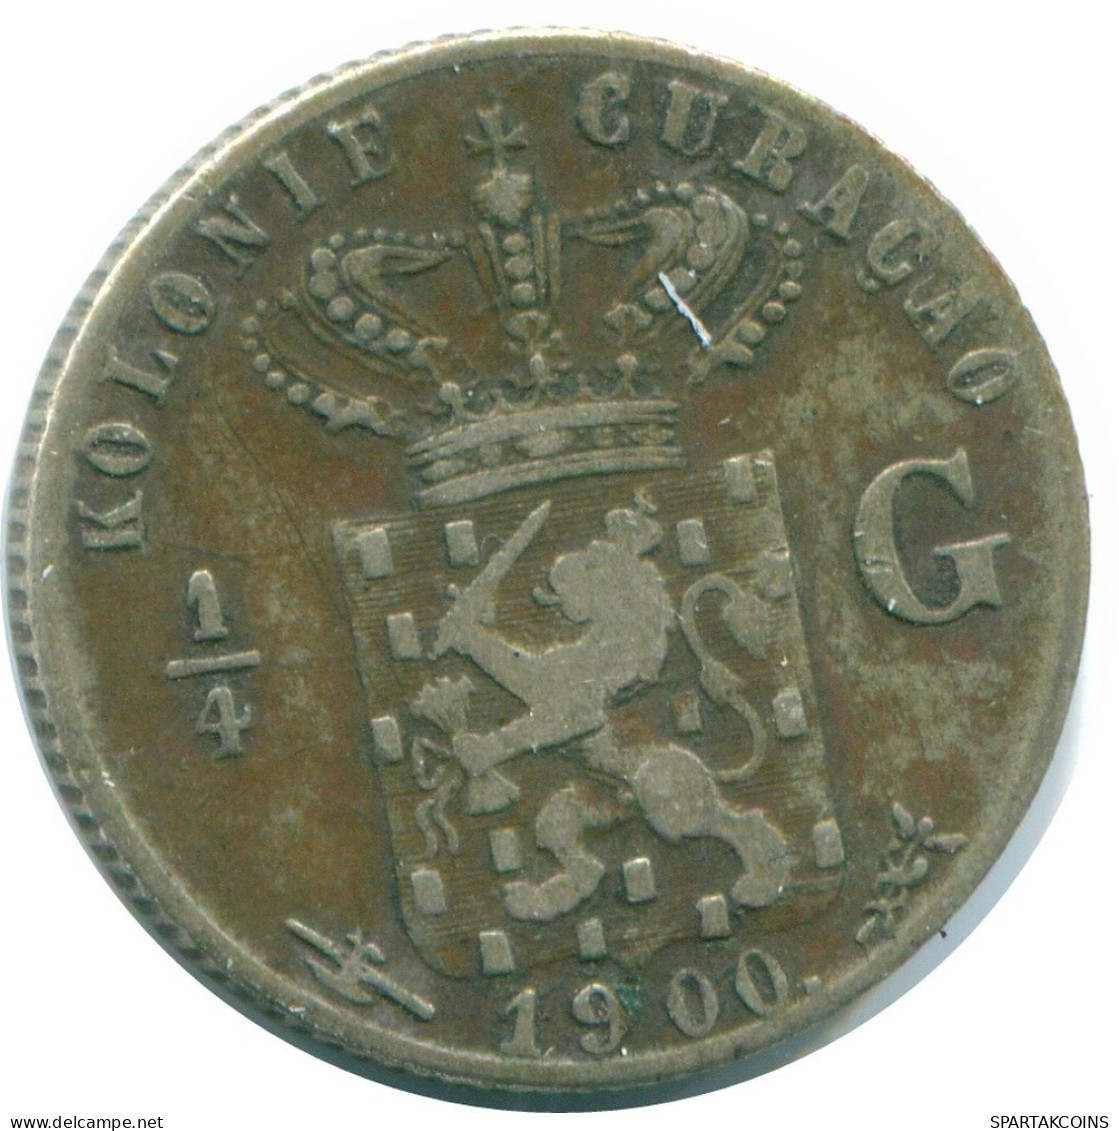 1/4 GULDEN 1900 CURACAO NIEDERLANDE SILBER Koloniale Münze #NL10522.4.D.A - Curaçao